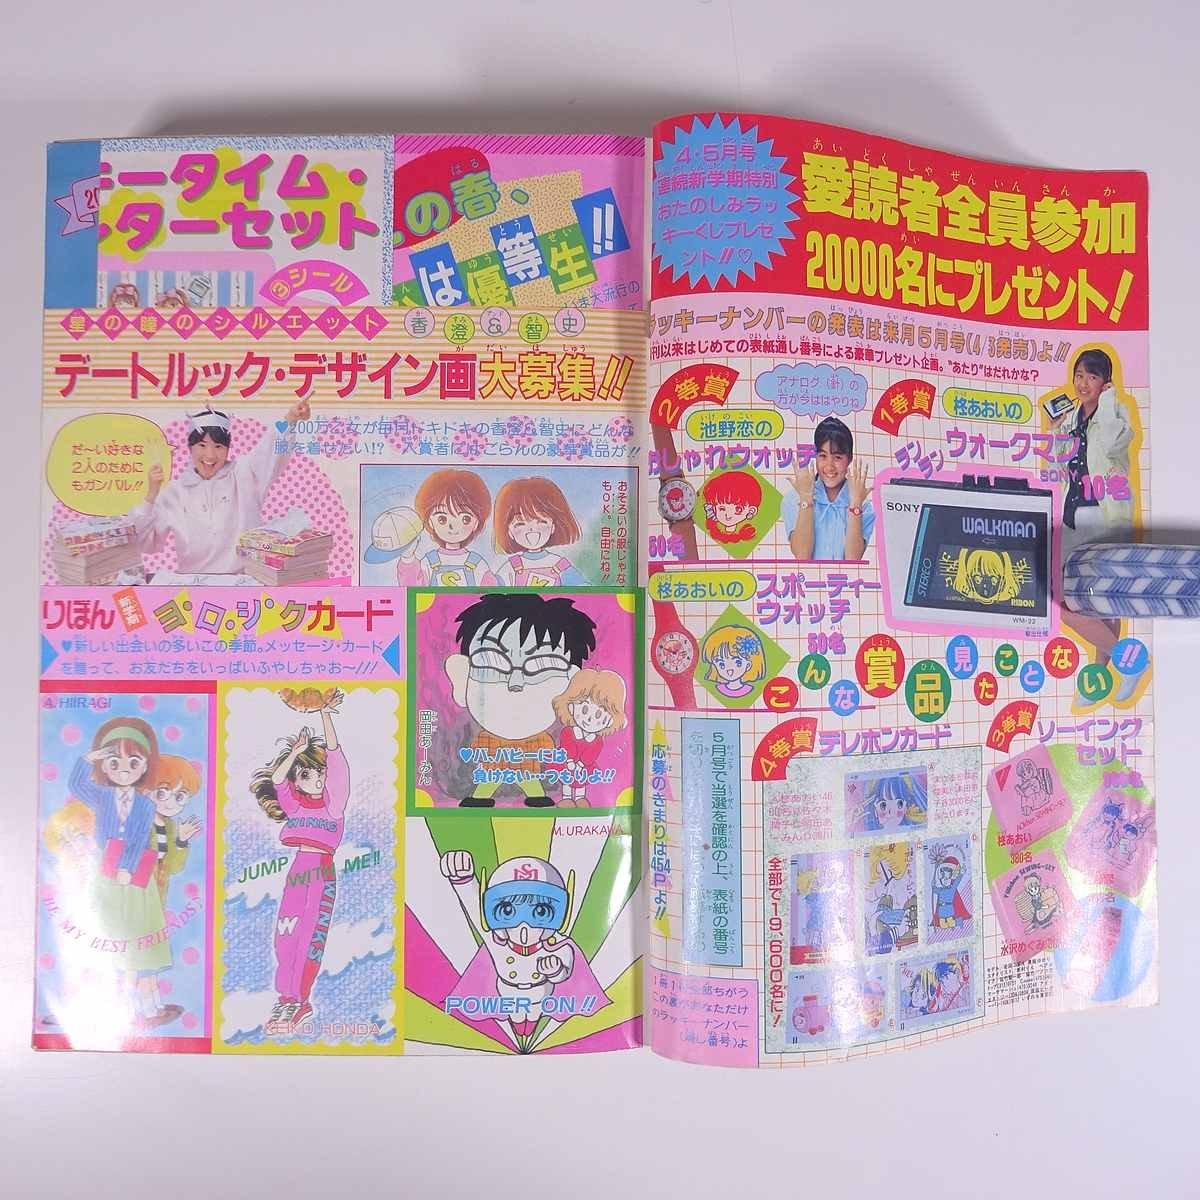  Ribon 1987/4 Shueisha magazine young lady manga ... manga comics volume head color * star. .. Silhouette .....go men another * condition defect 